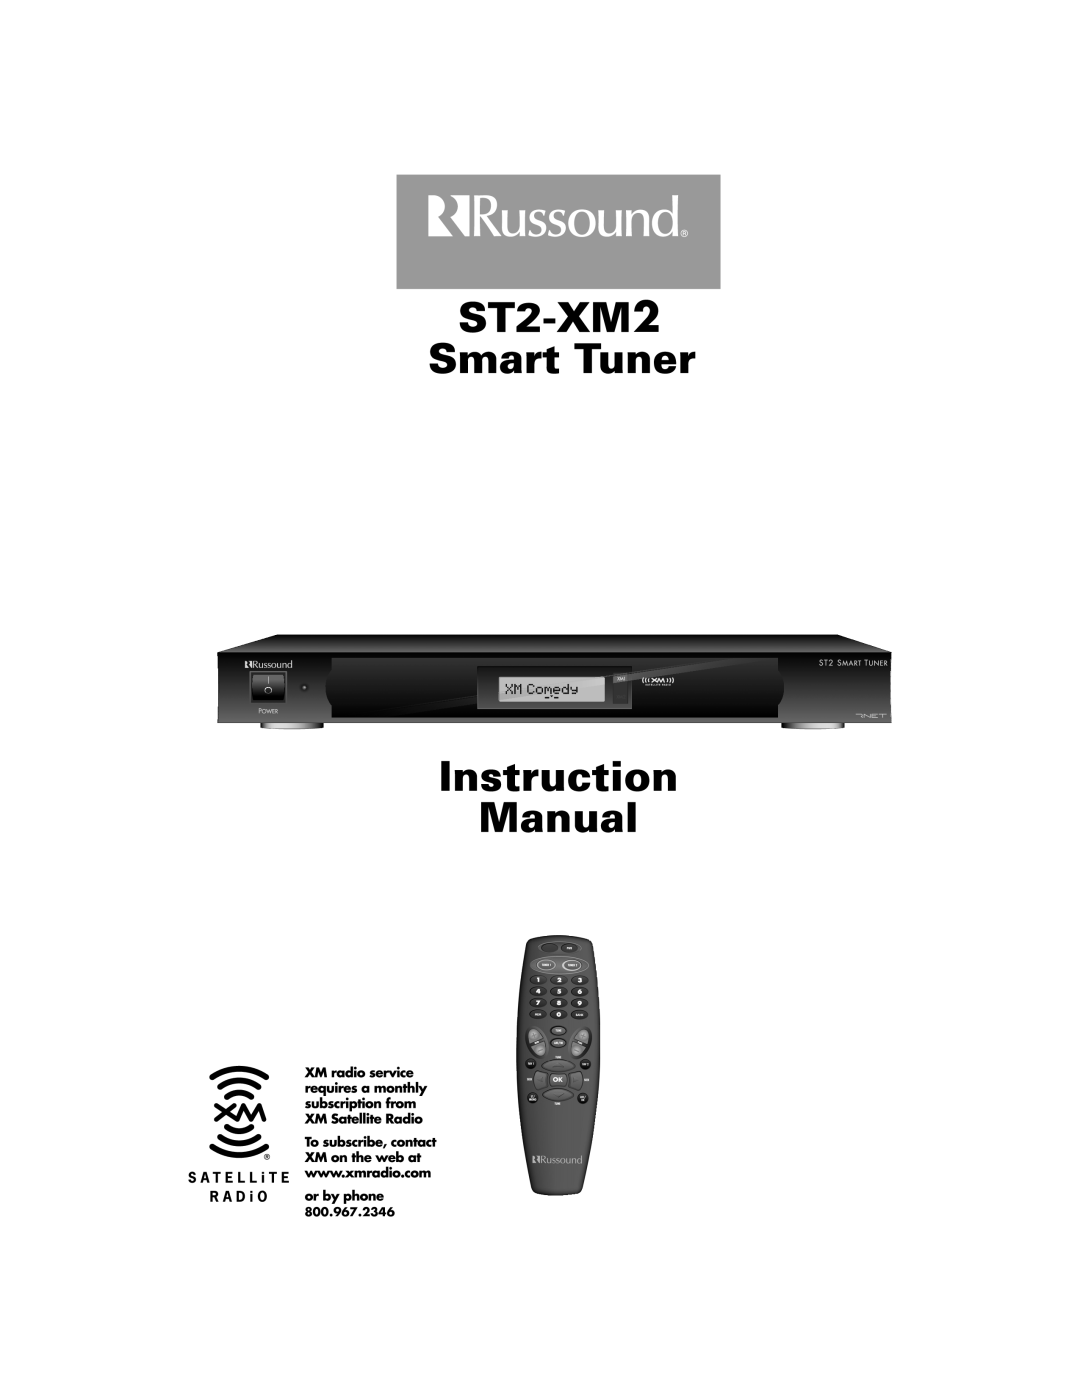 Russound ST2-XM2 manual 800.967.2346 